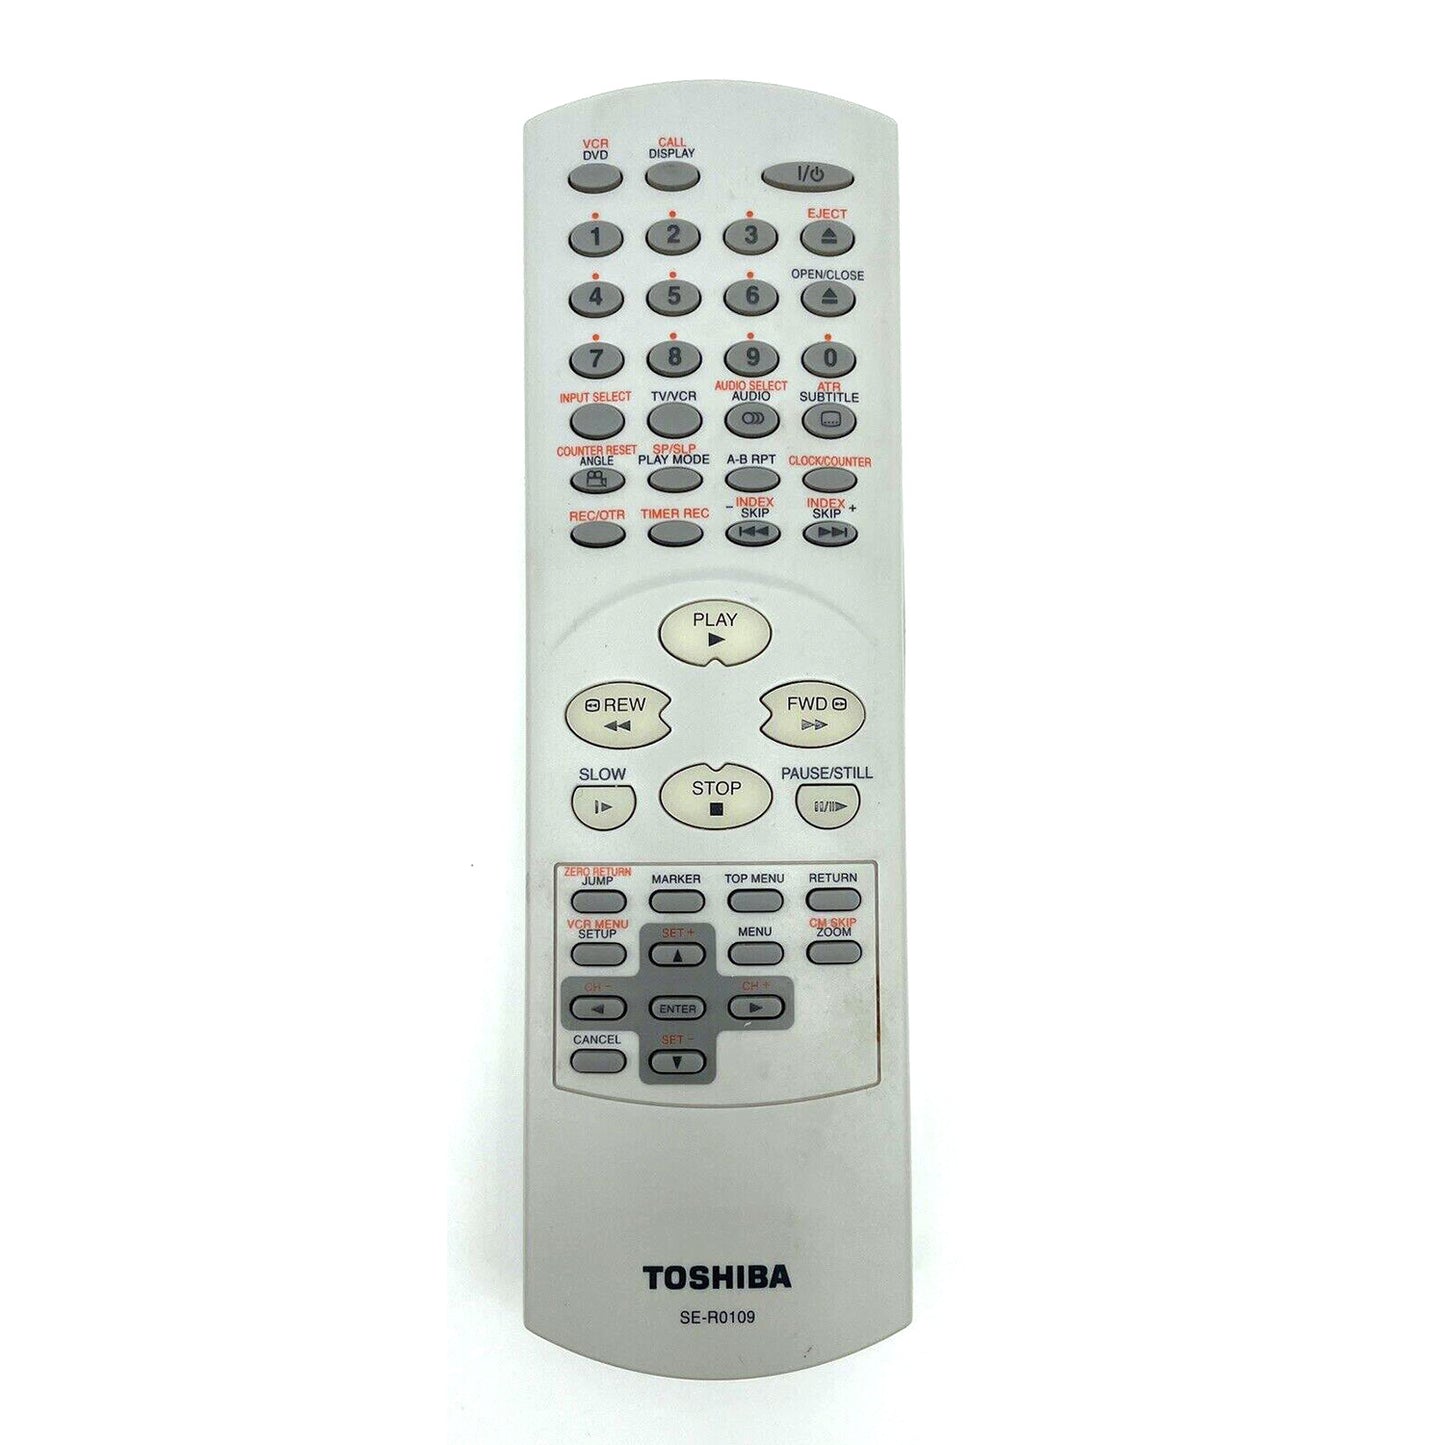 Toshiba SD-V220U VCR/DVD Player Combo - Remote Control